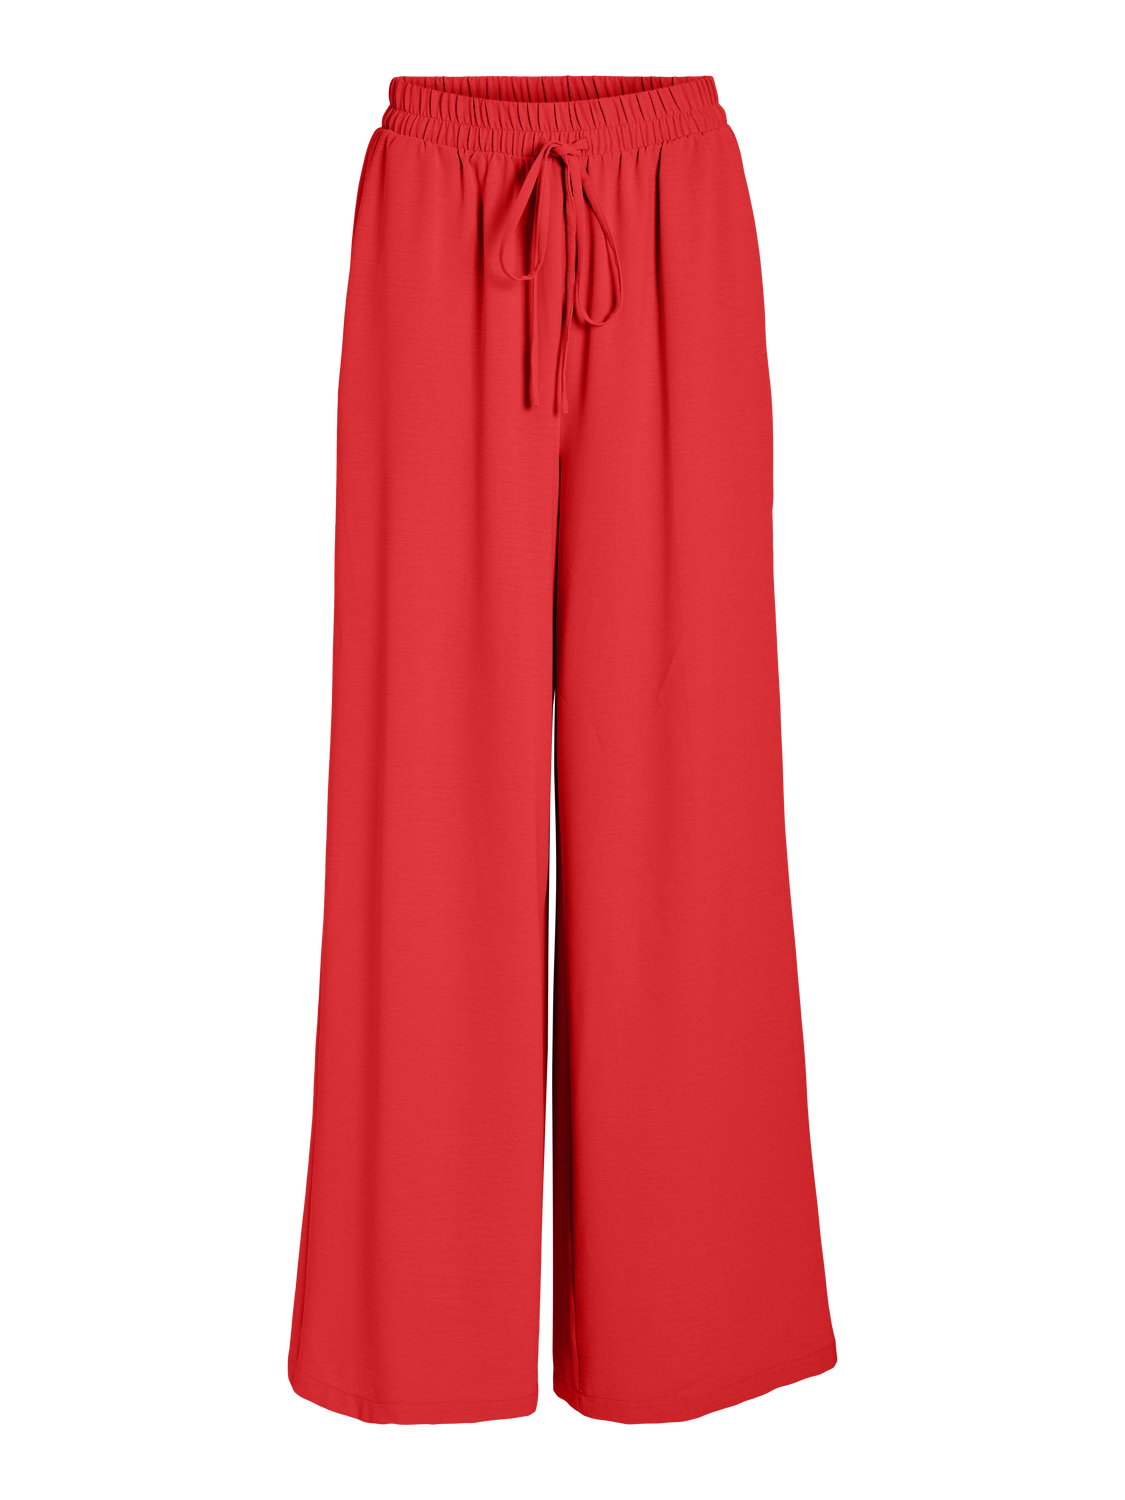 VIHELA Pants - Poppy Red